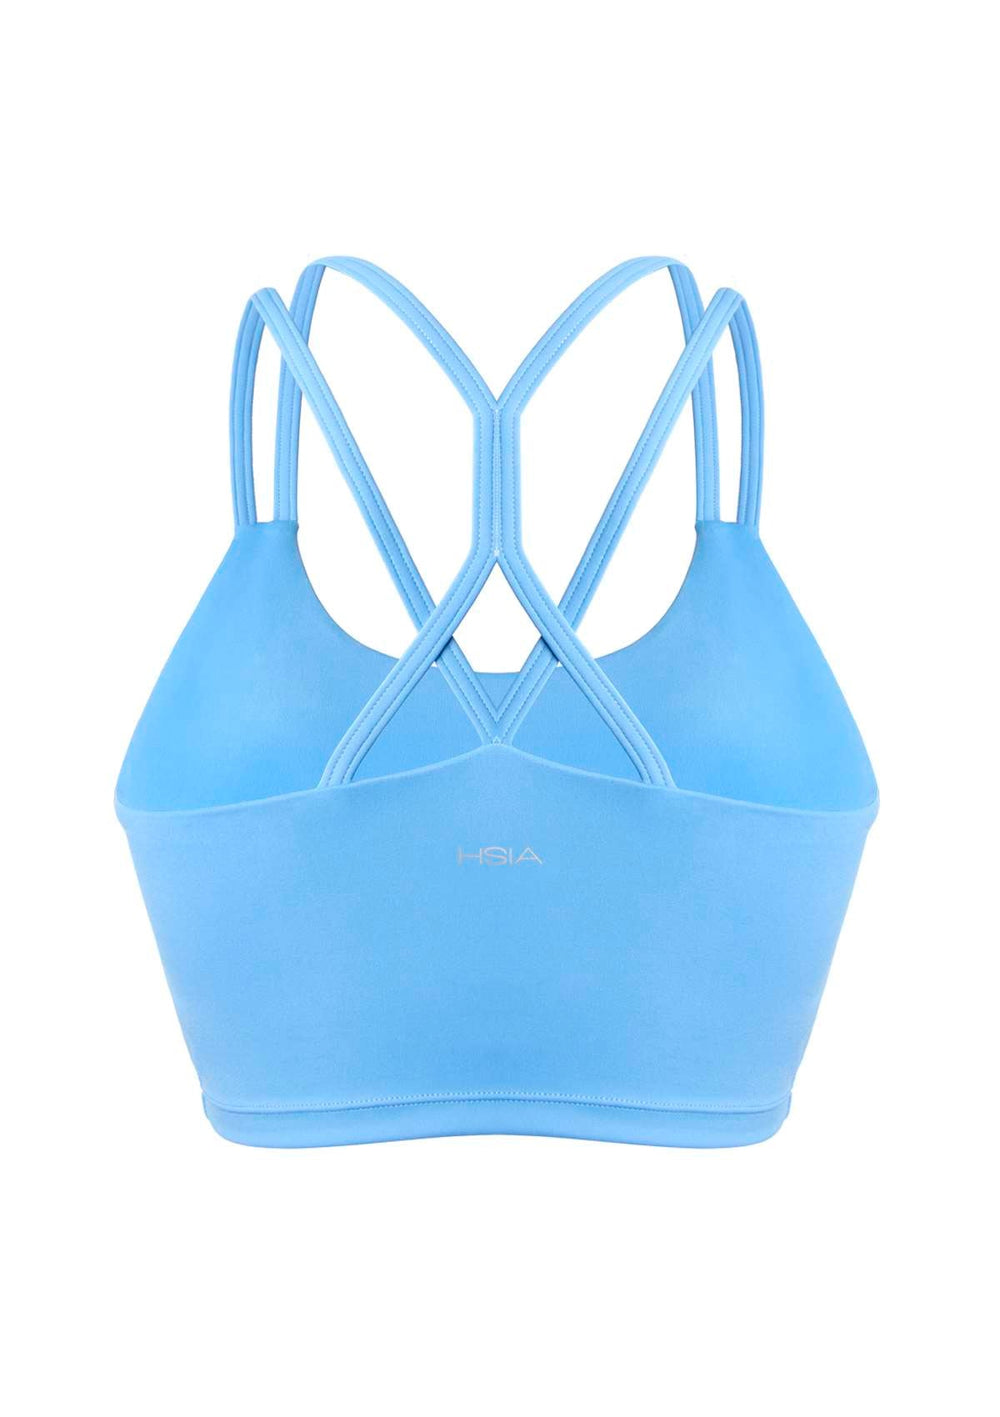 Bcg blue & gray padded sports bra women's size medium - $14 - From Iriana